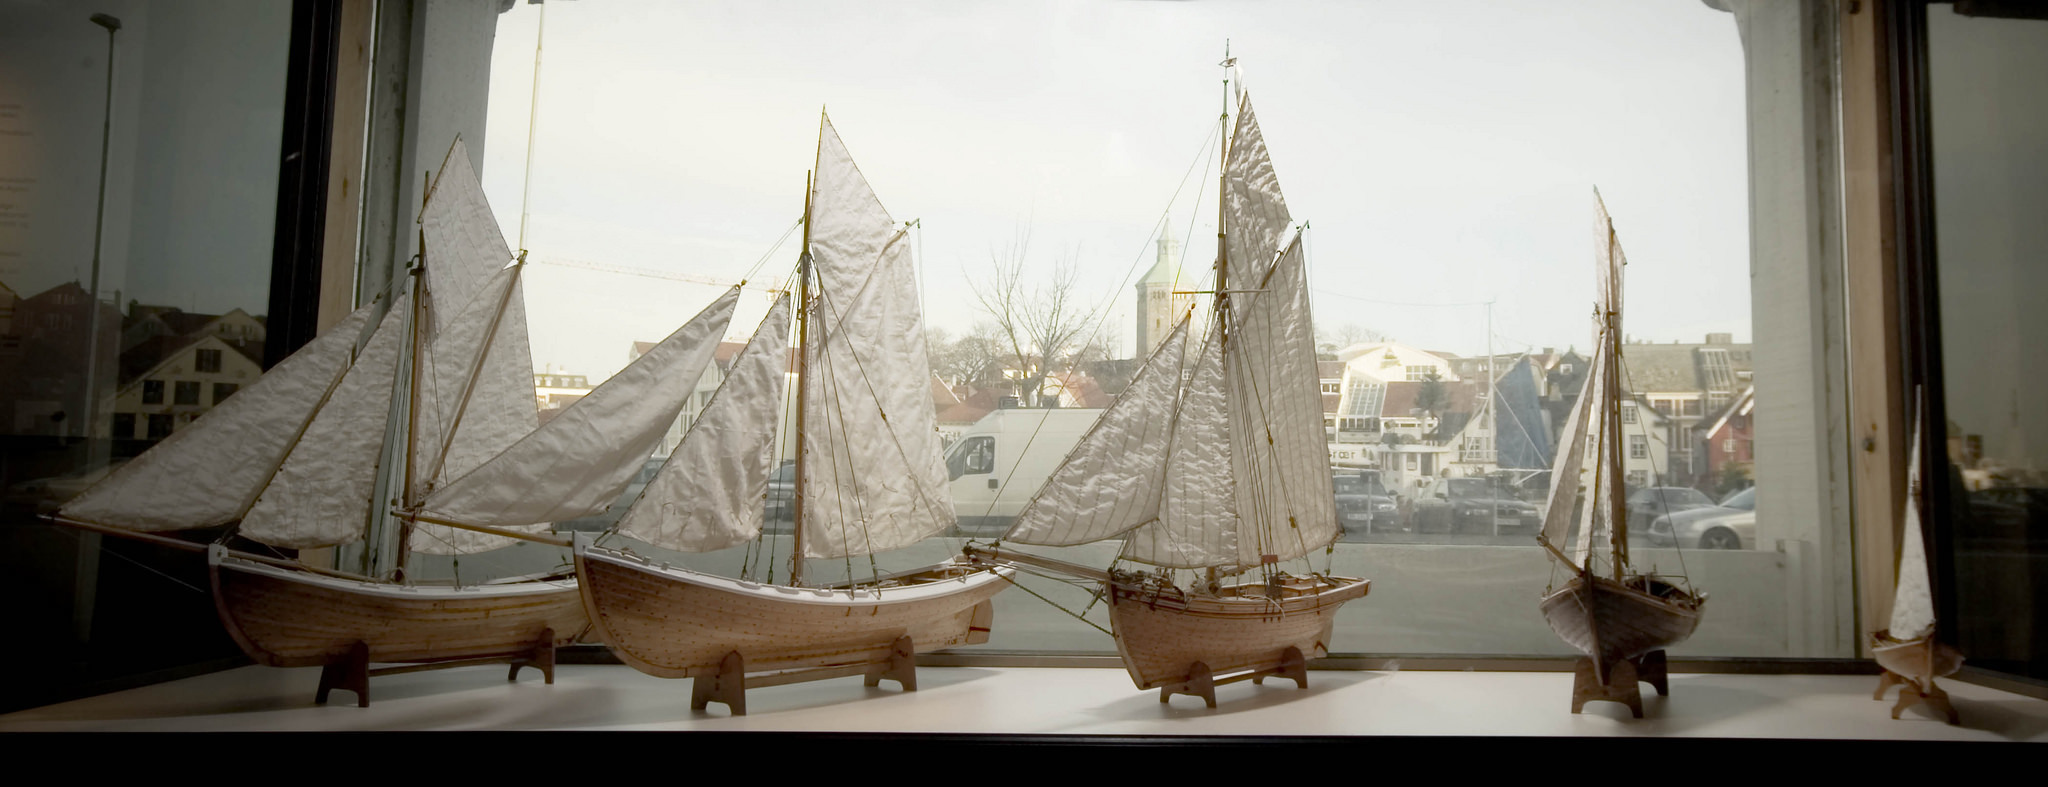 stavanger-maritime-museum-8.jpg#asset:16